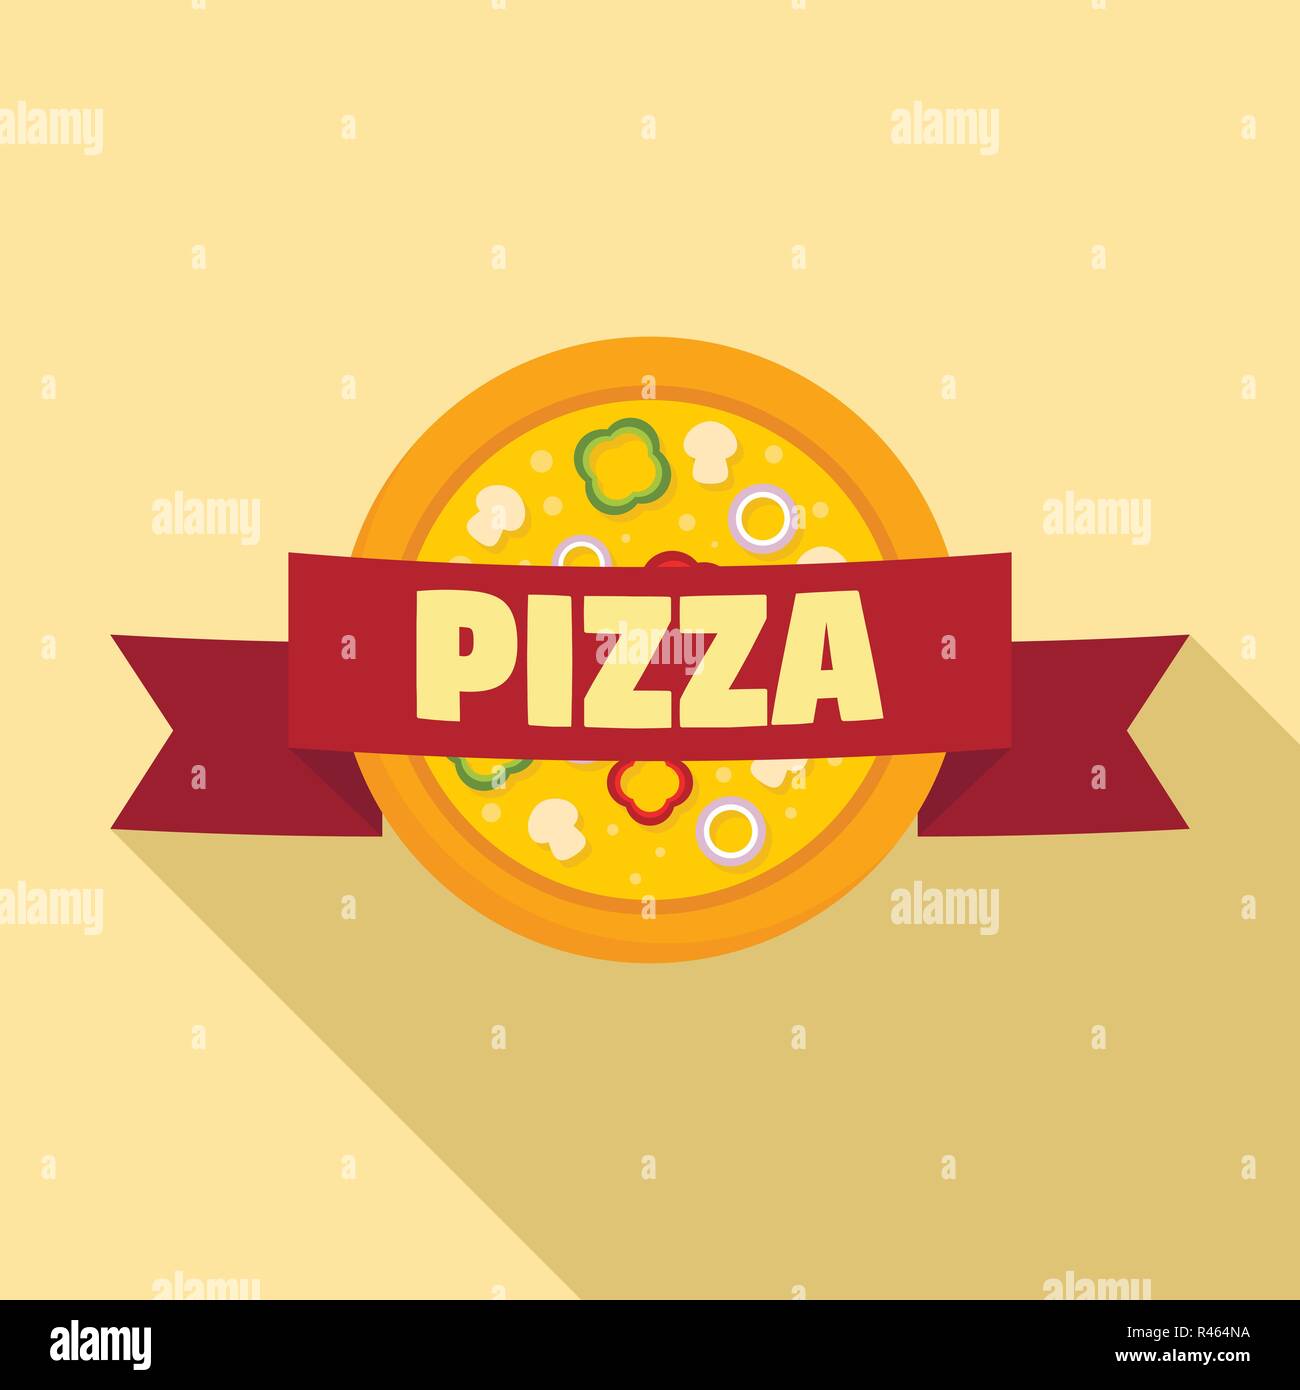 Pizza logo Vectors & Illustrations for Free Download